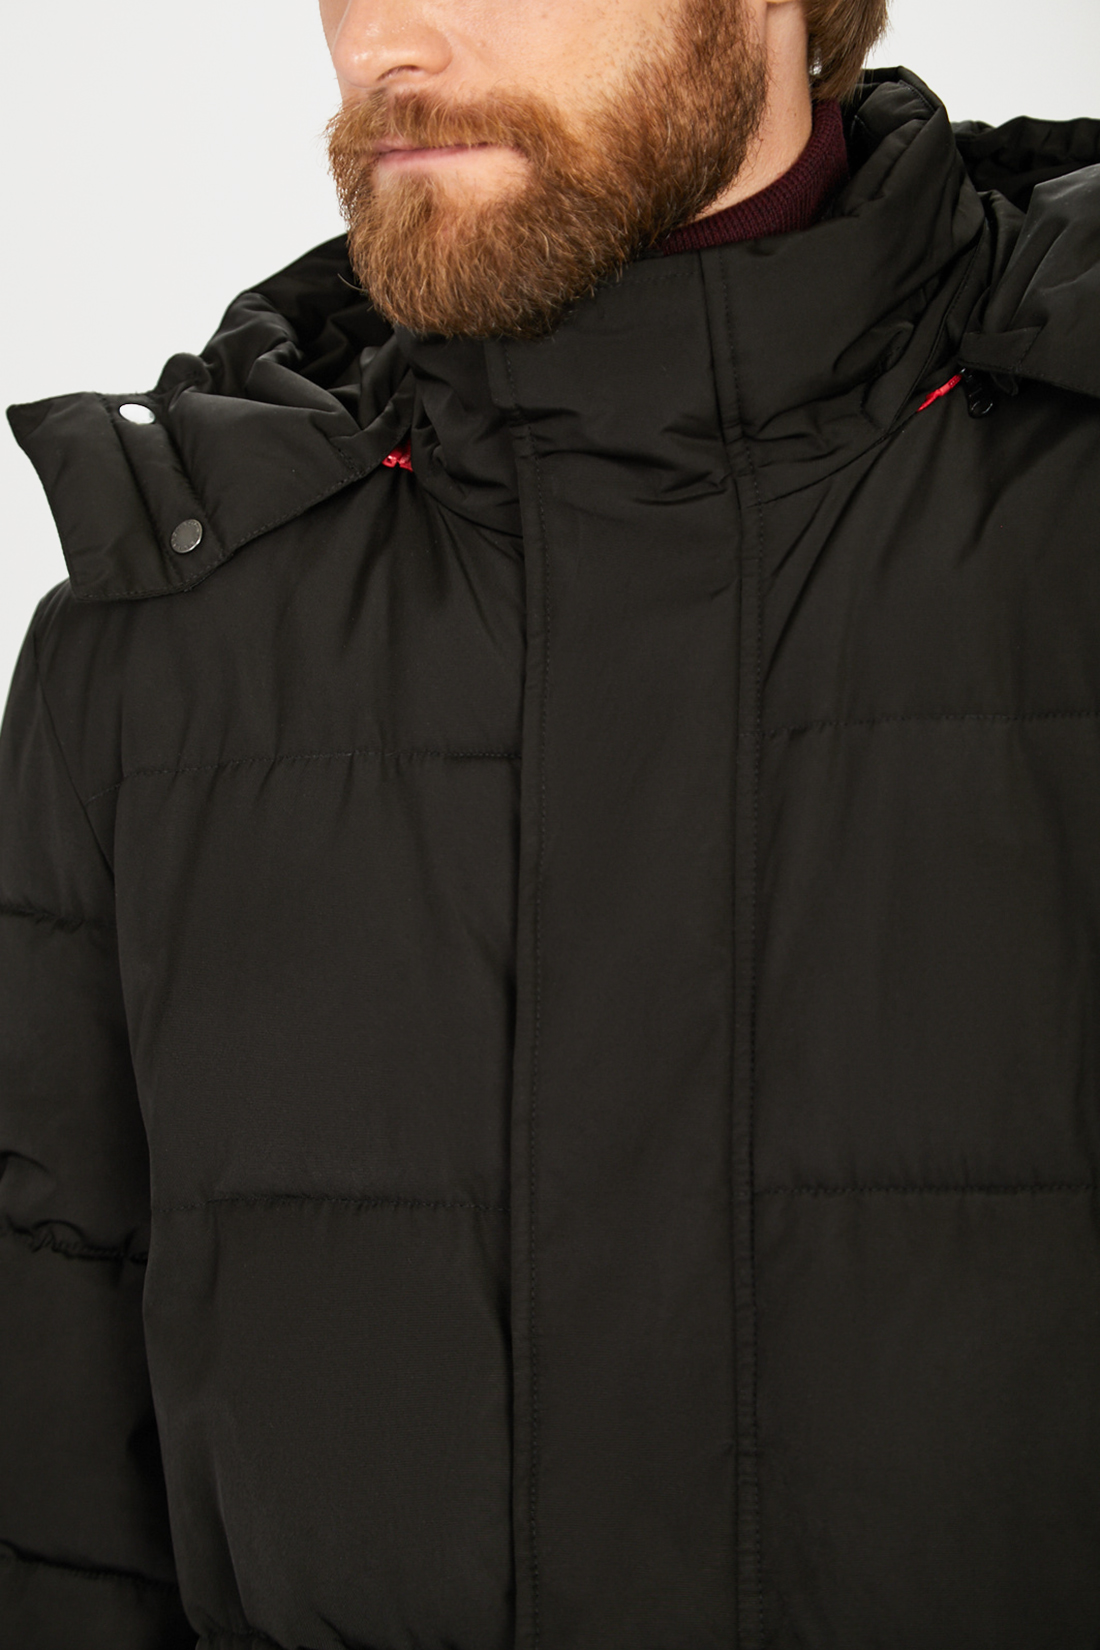 Куртка (Эко пух) (арт. baon B541506), размер M, цвет черный Куртка (Эко пух) (арт. baon B541506) - фото 4